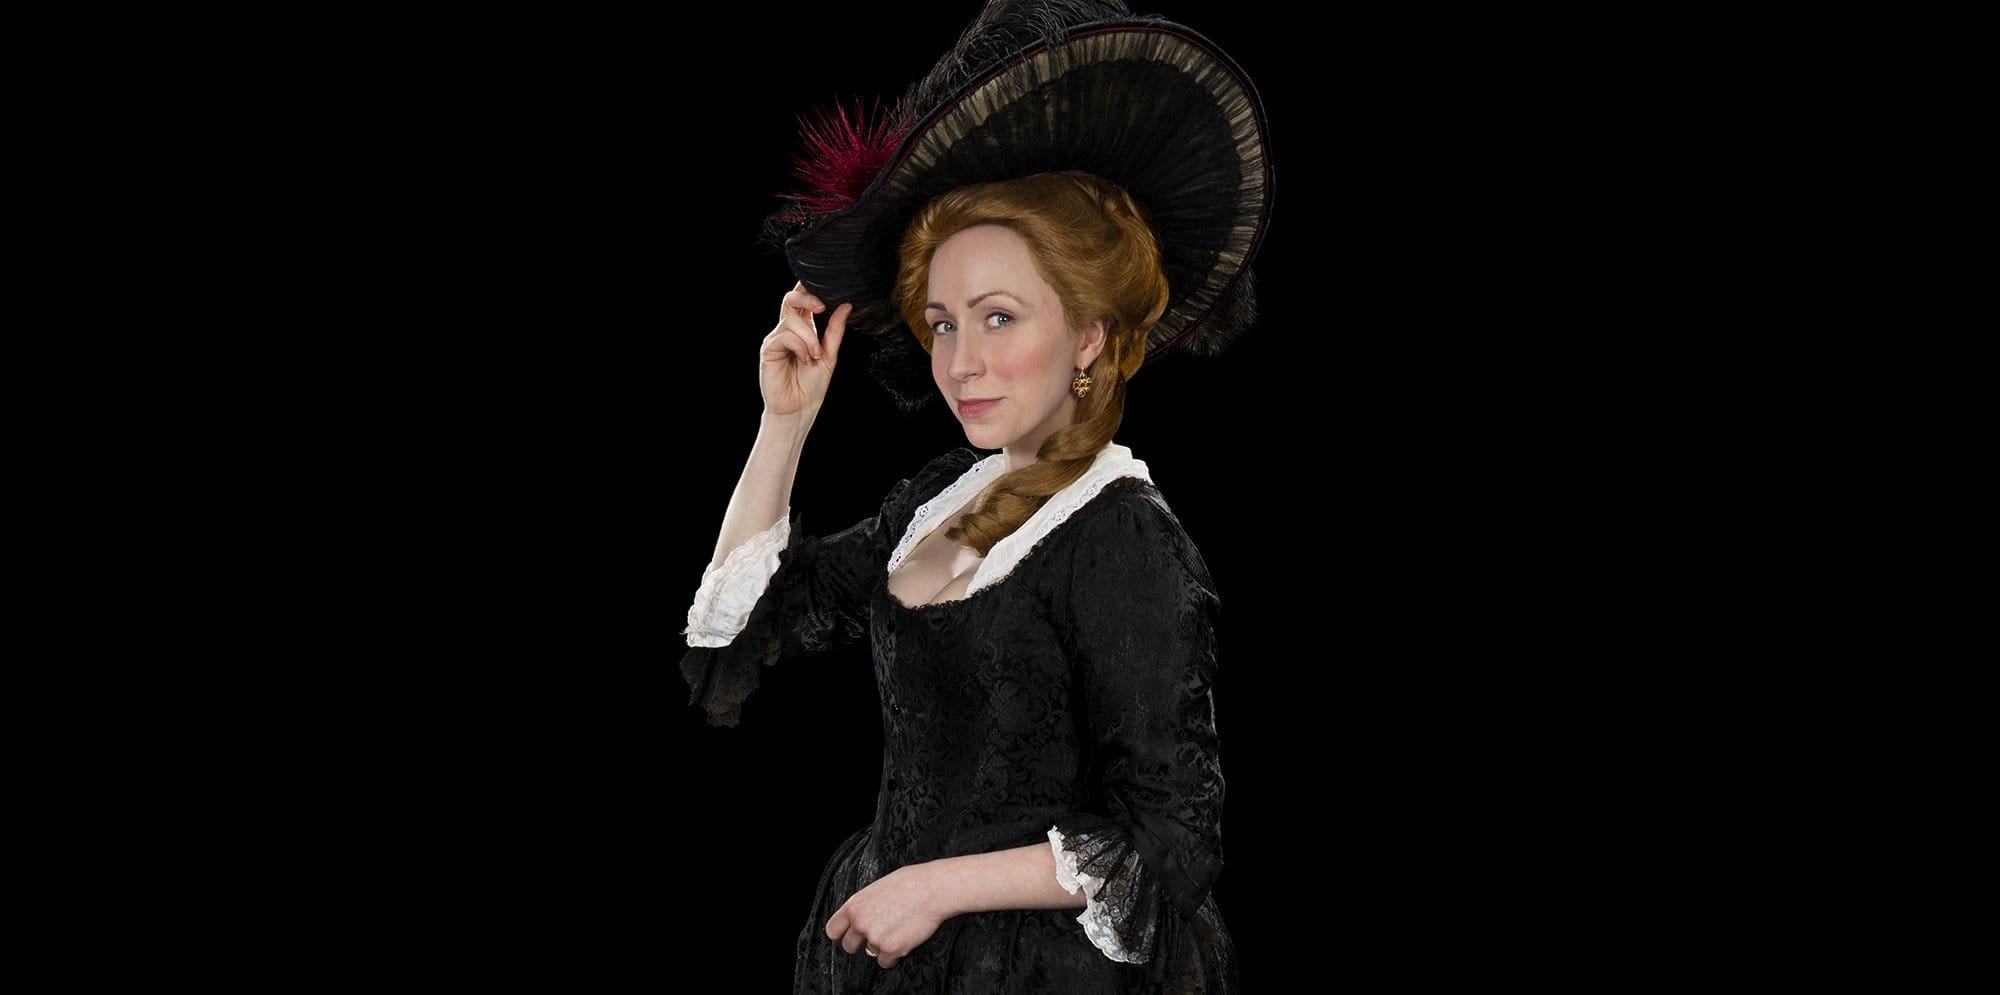 A women wears an 1800's style black dress and hat